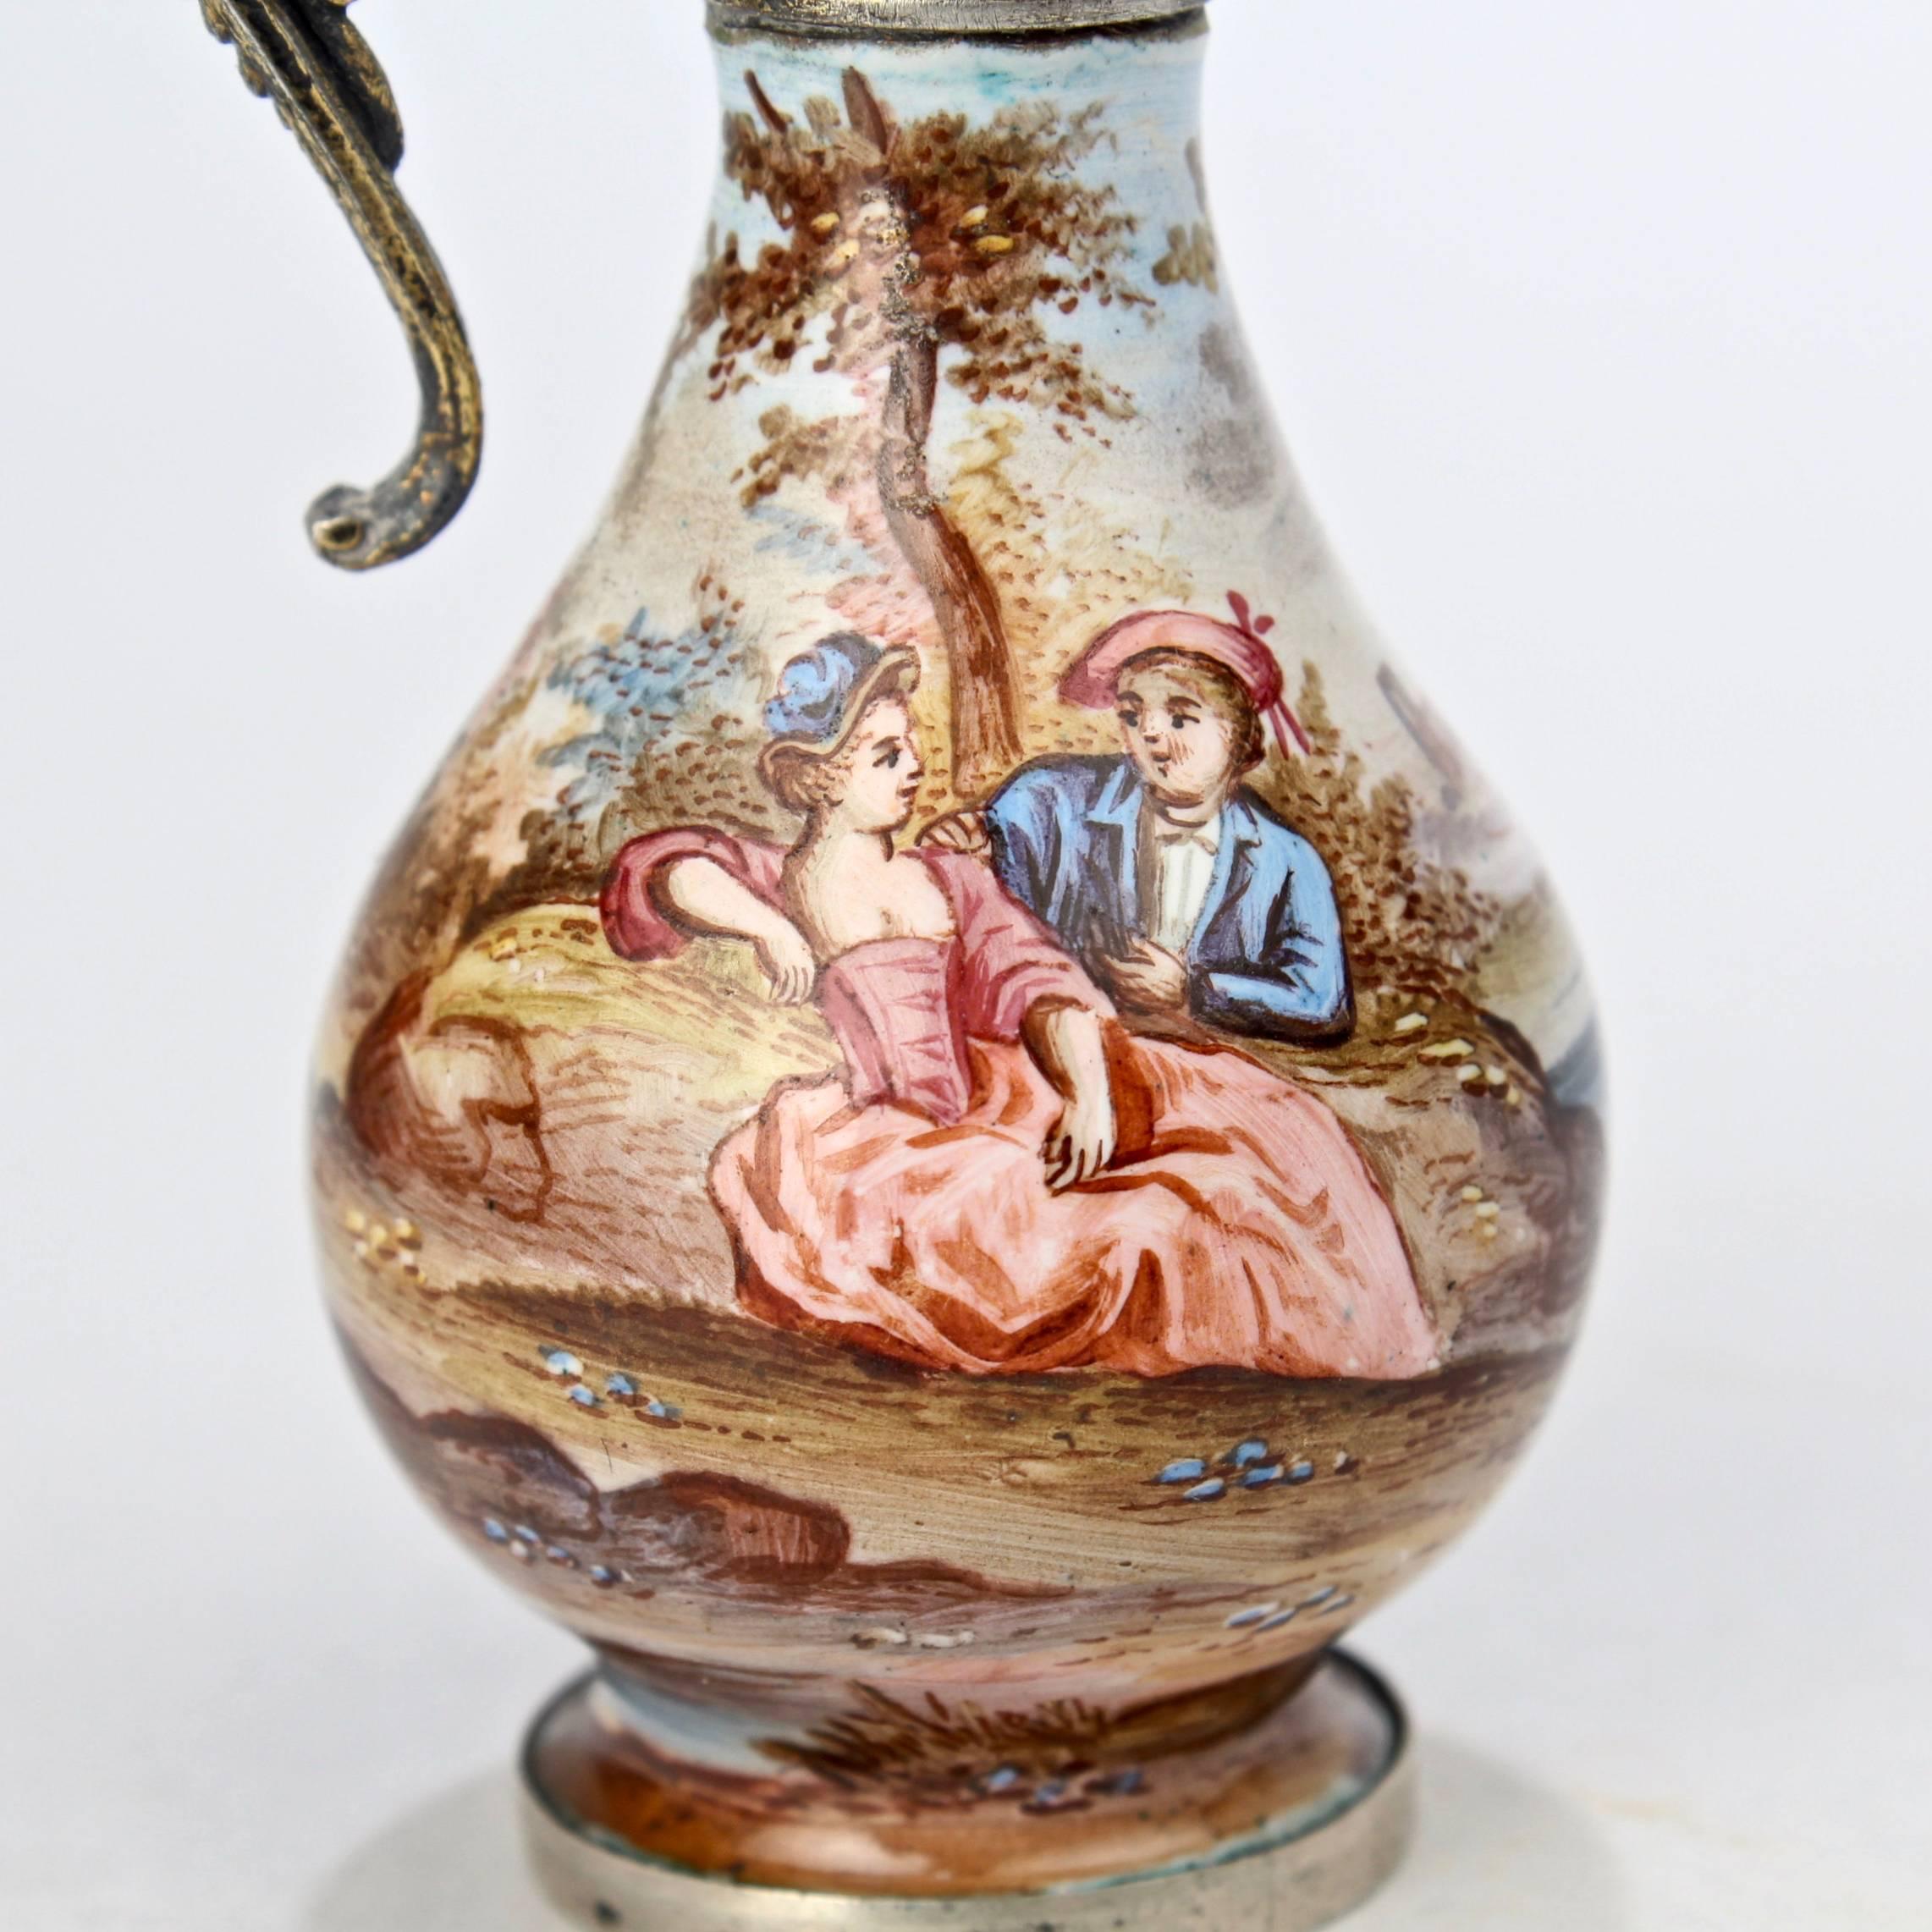 19th Century Signed Hermann Boehm Viennese Enamel & Silver Miniature Ewer Form Perfume Bottle